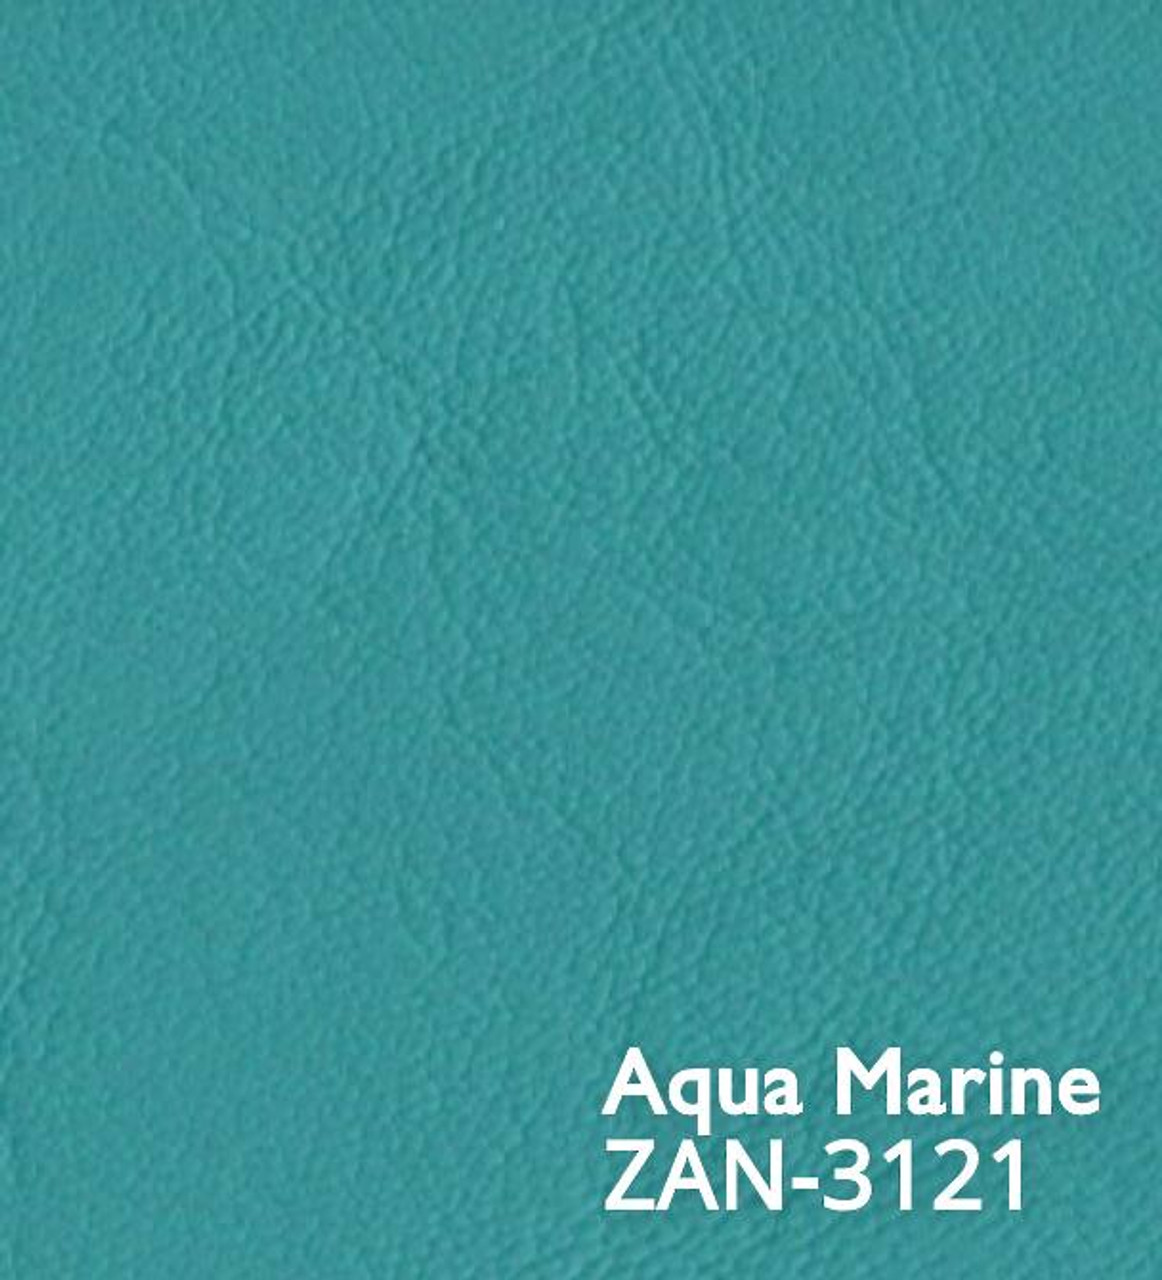 1 x Brand New Aqua Blue Tissue Paper 15 inch x 20 inch - 100 Sheets